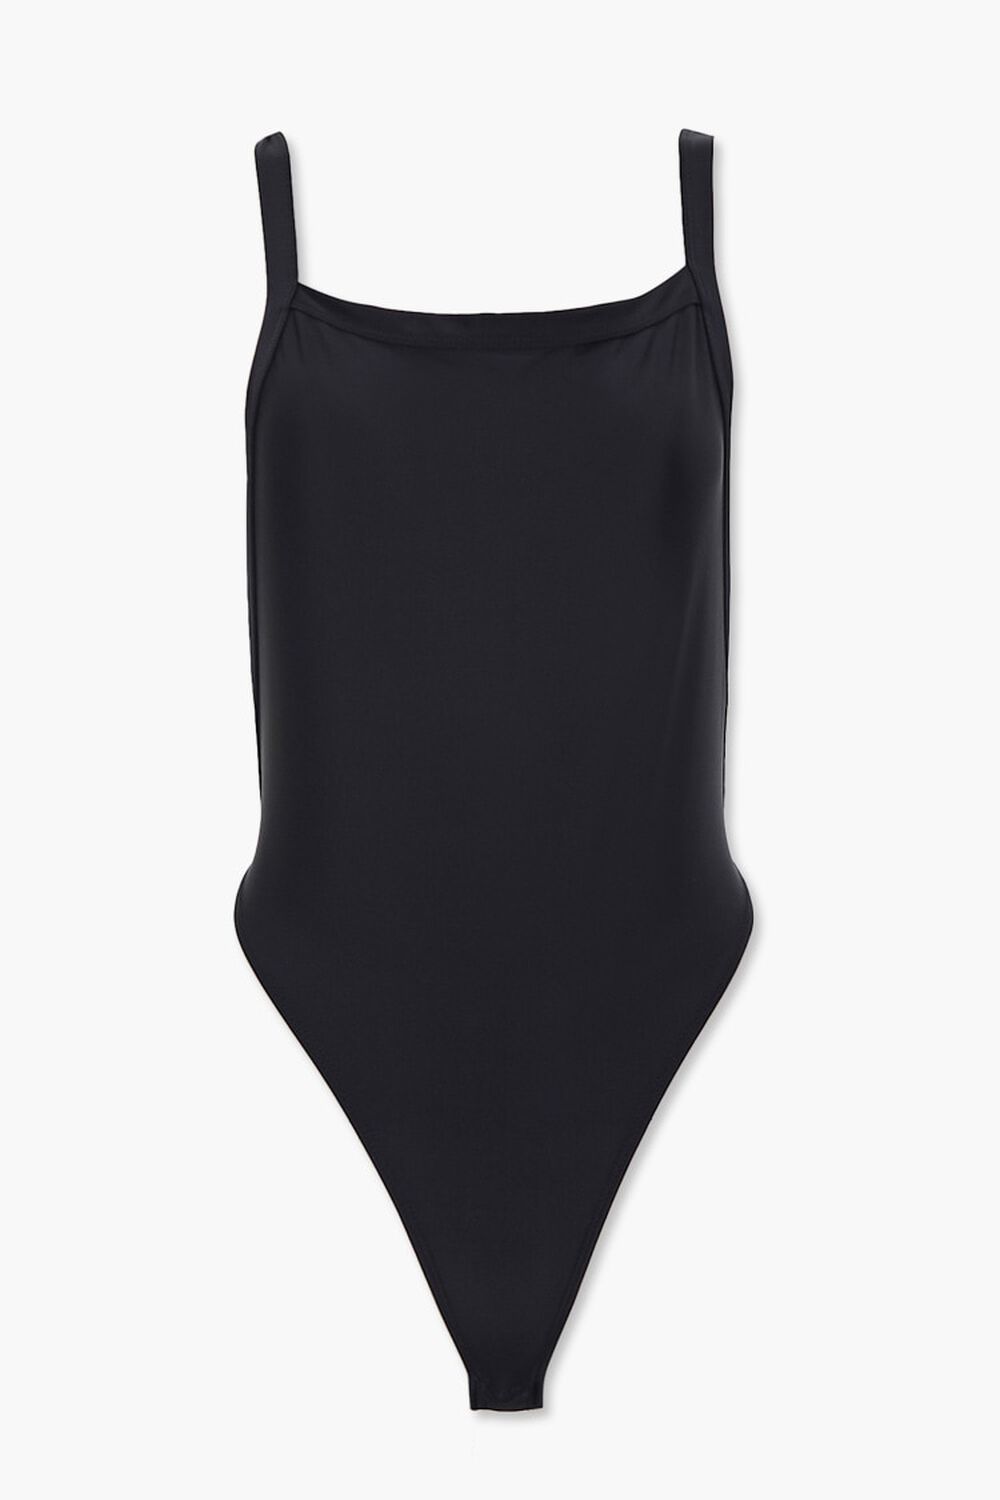 BLACK Cheeky Plunge-Back Bodysuit, image 1